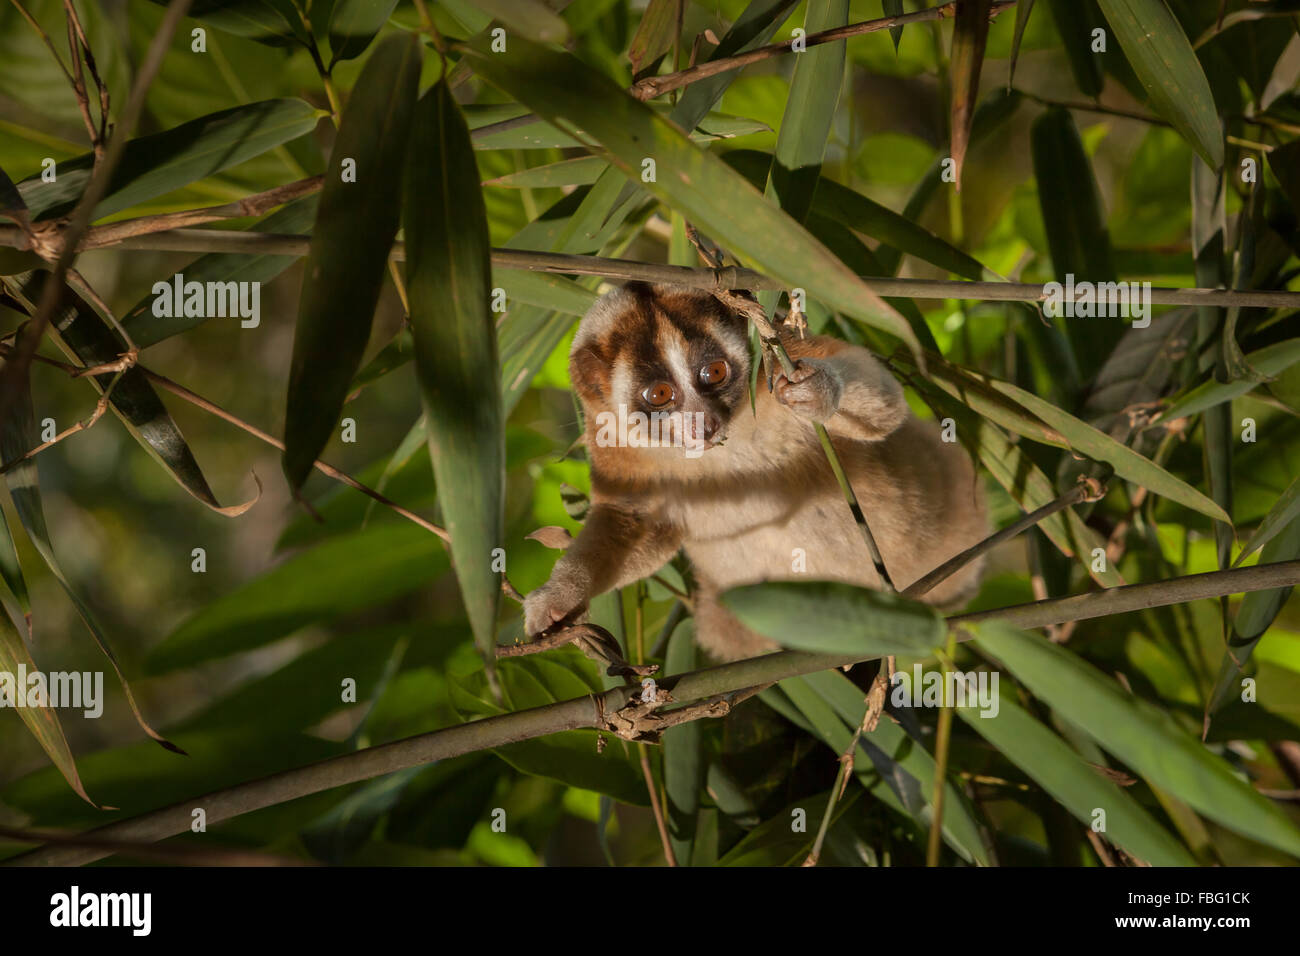 Wild Iavan slow loris (Nycticebus javanicus) tra le foglie di bambù. Foto Stock